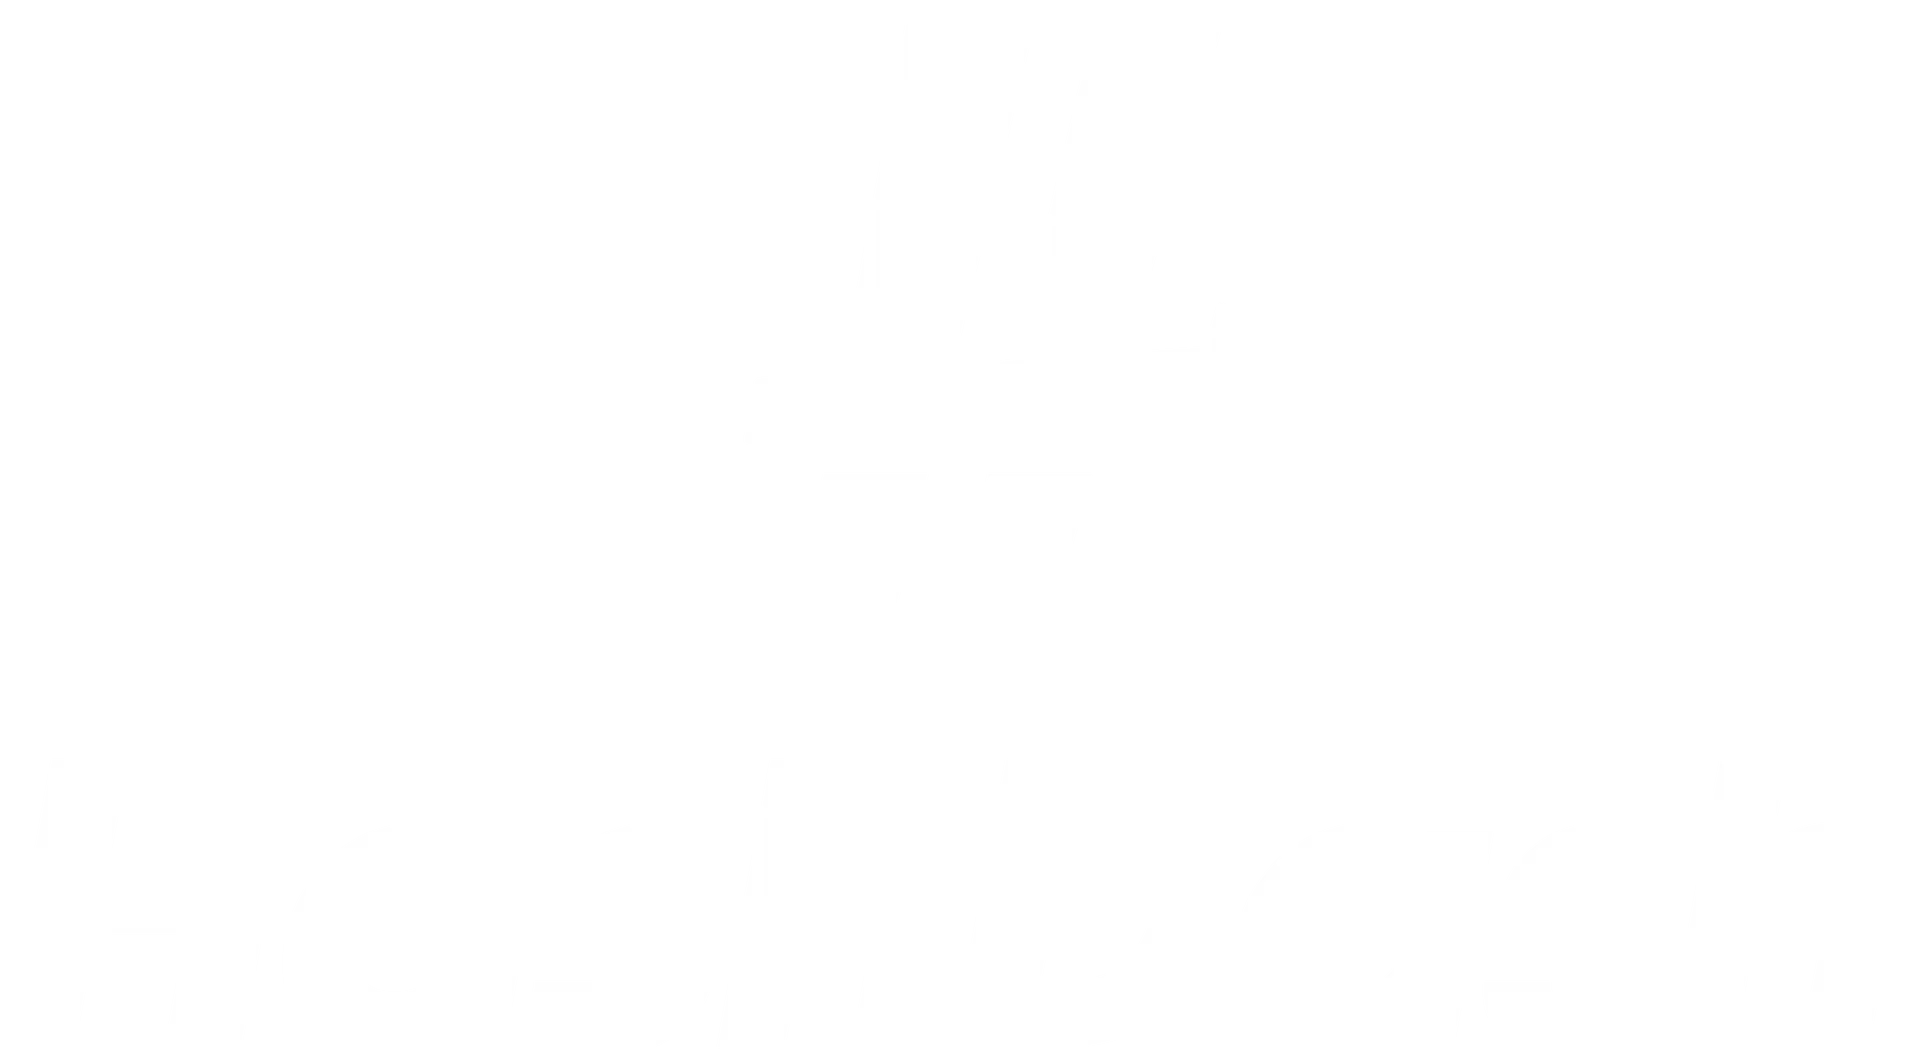 hashdash logo black and white